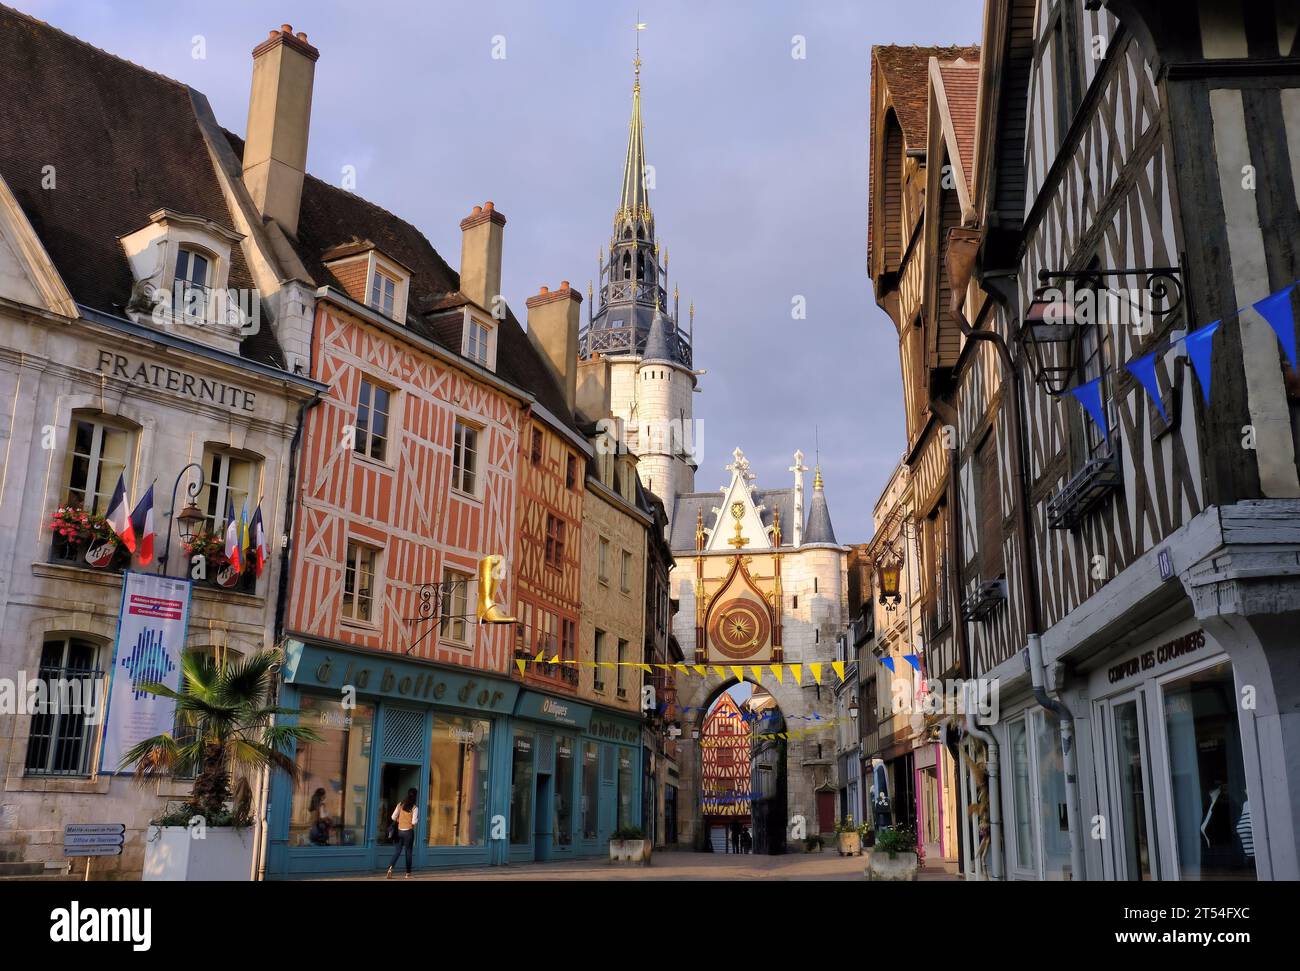 Auxerre: La Tour de l’Horloge (Clock tower) and half timbered buildings in Place de l’Hotel de Ville soon after sunrise in Auxerre, Burgundy, France Stock Photo